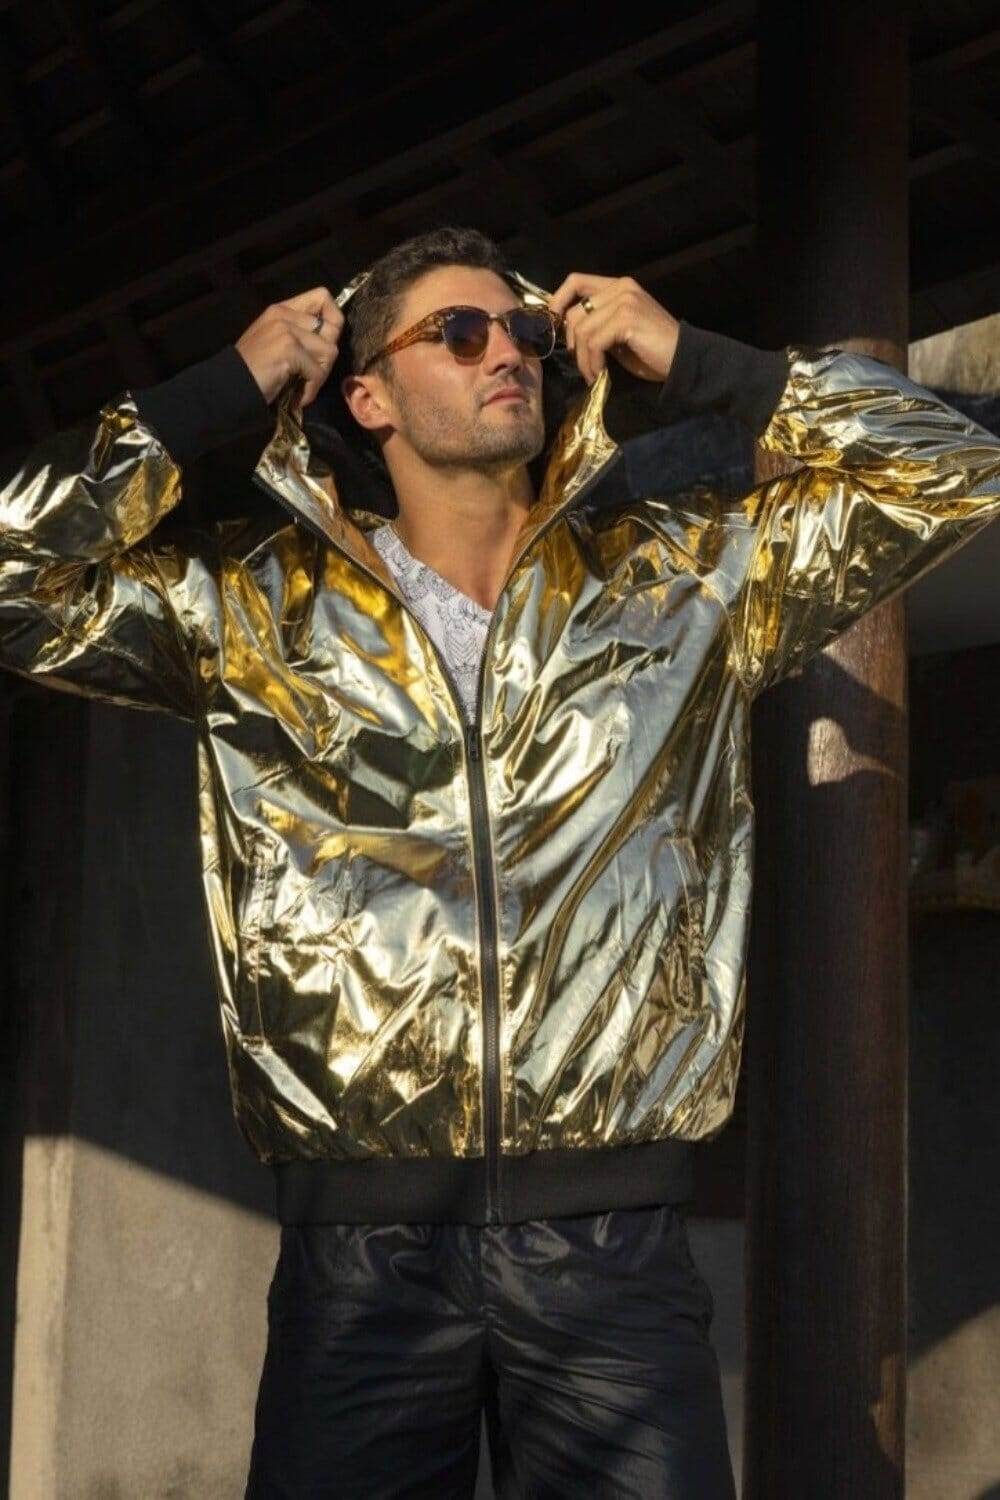 mens metallic gold jacket windbreaker for festivals by Love Khaos